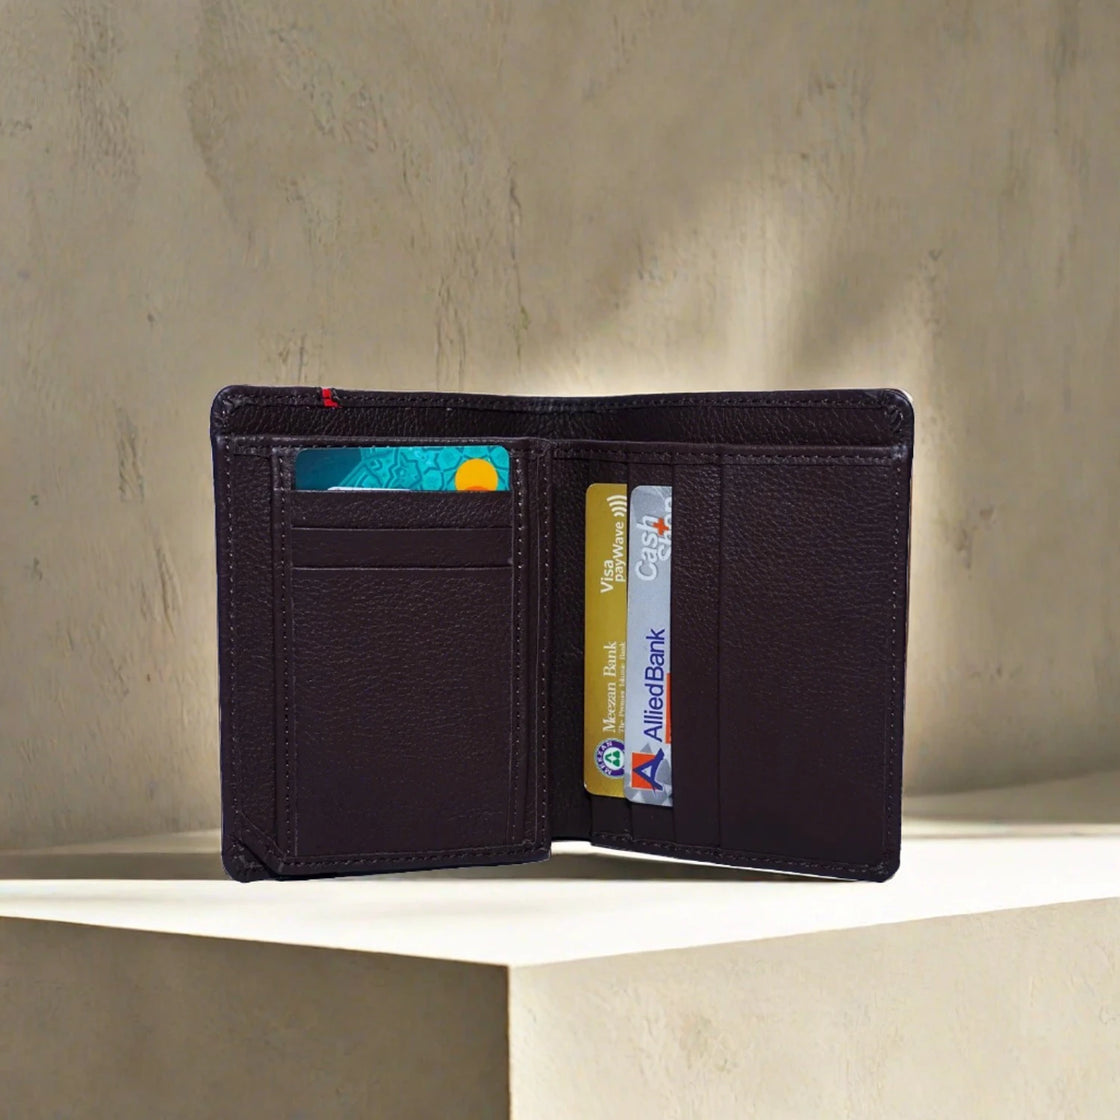 Verax Leather Wallet